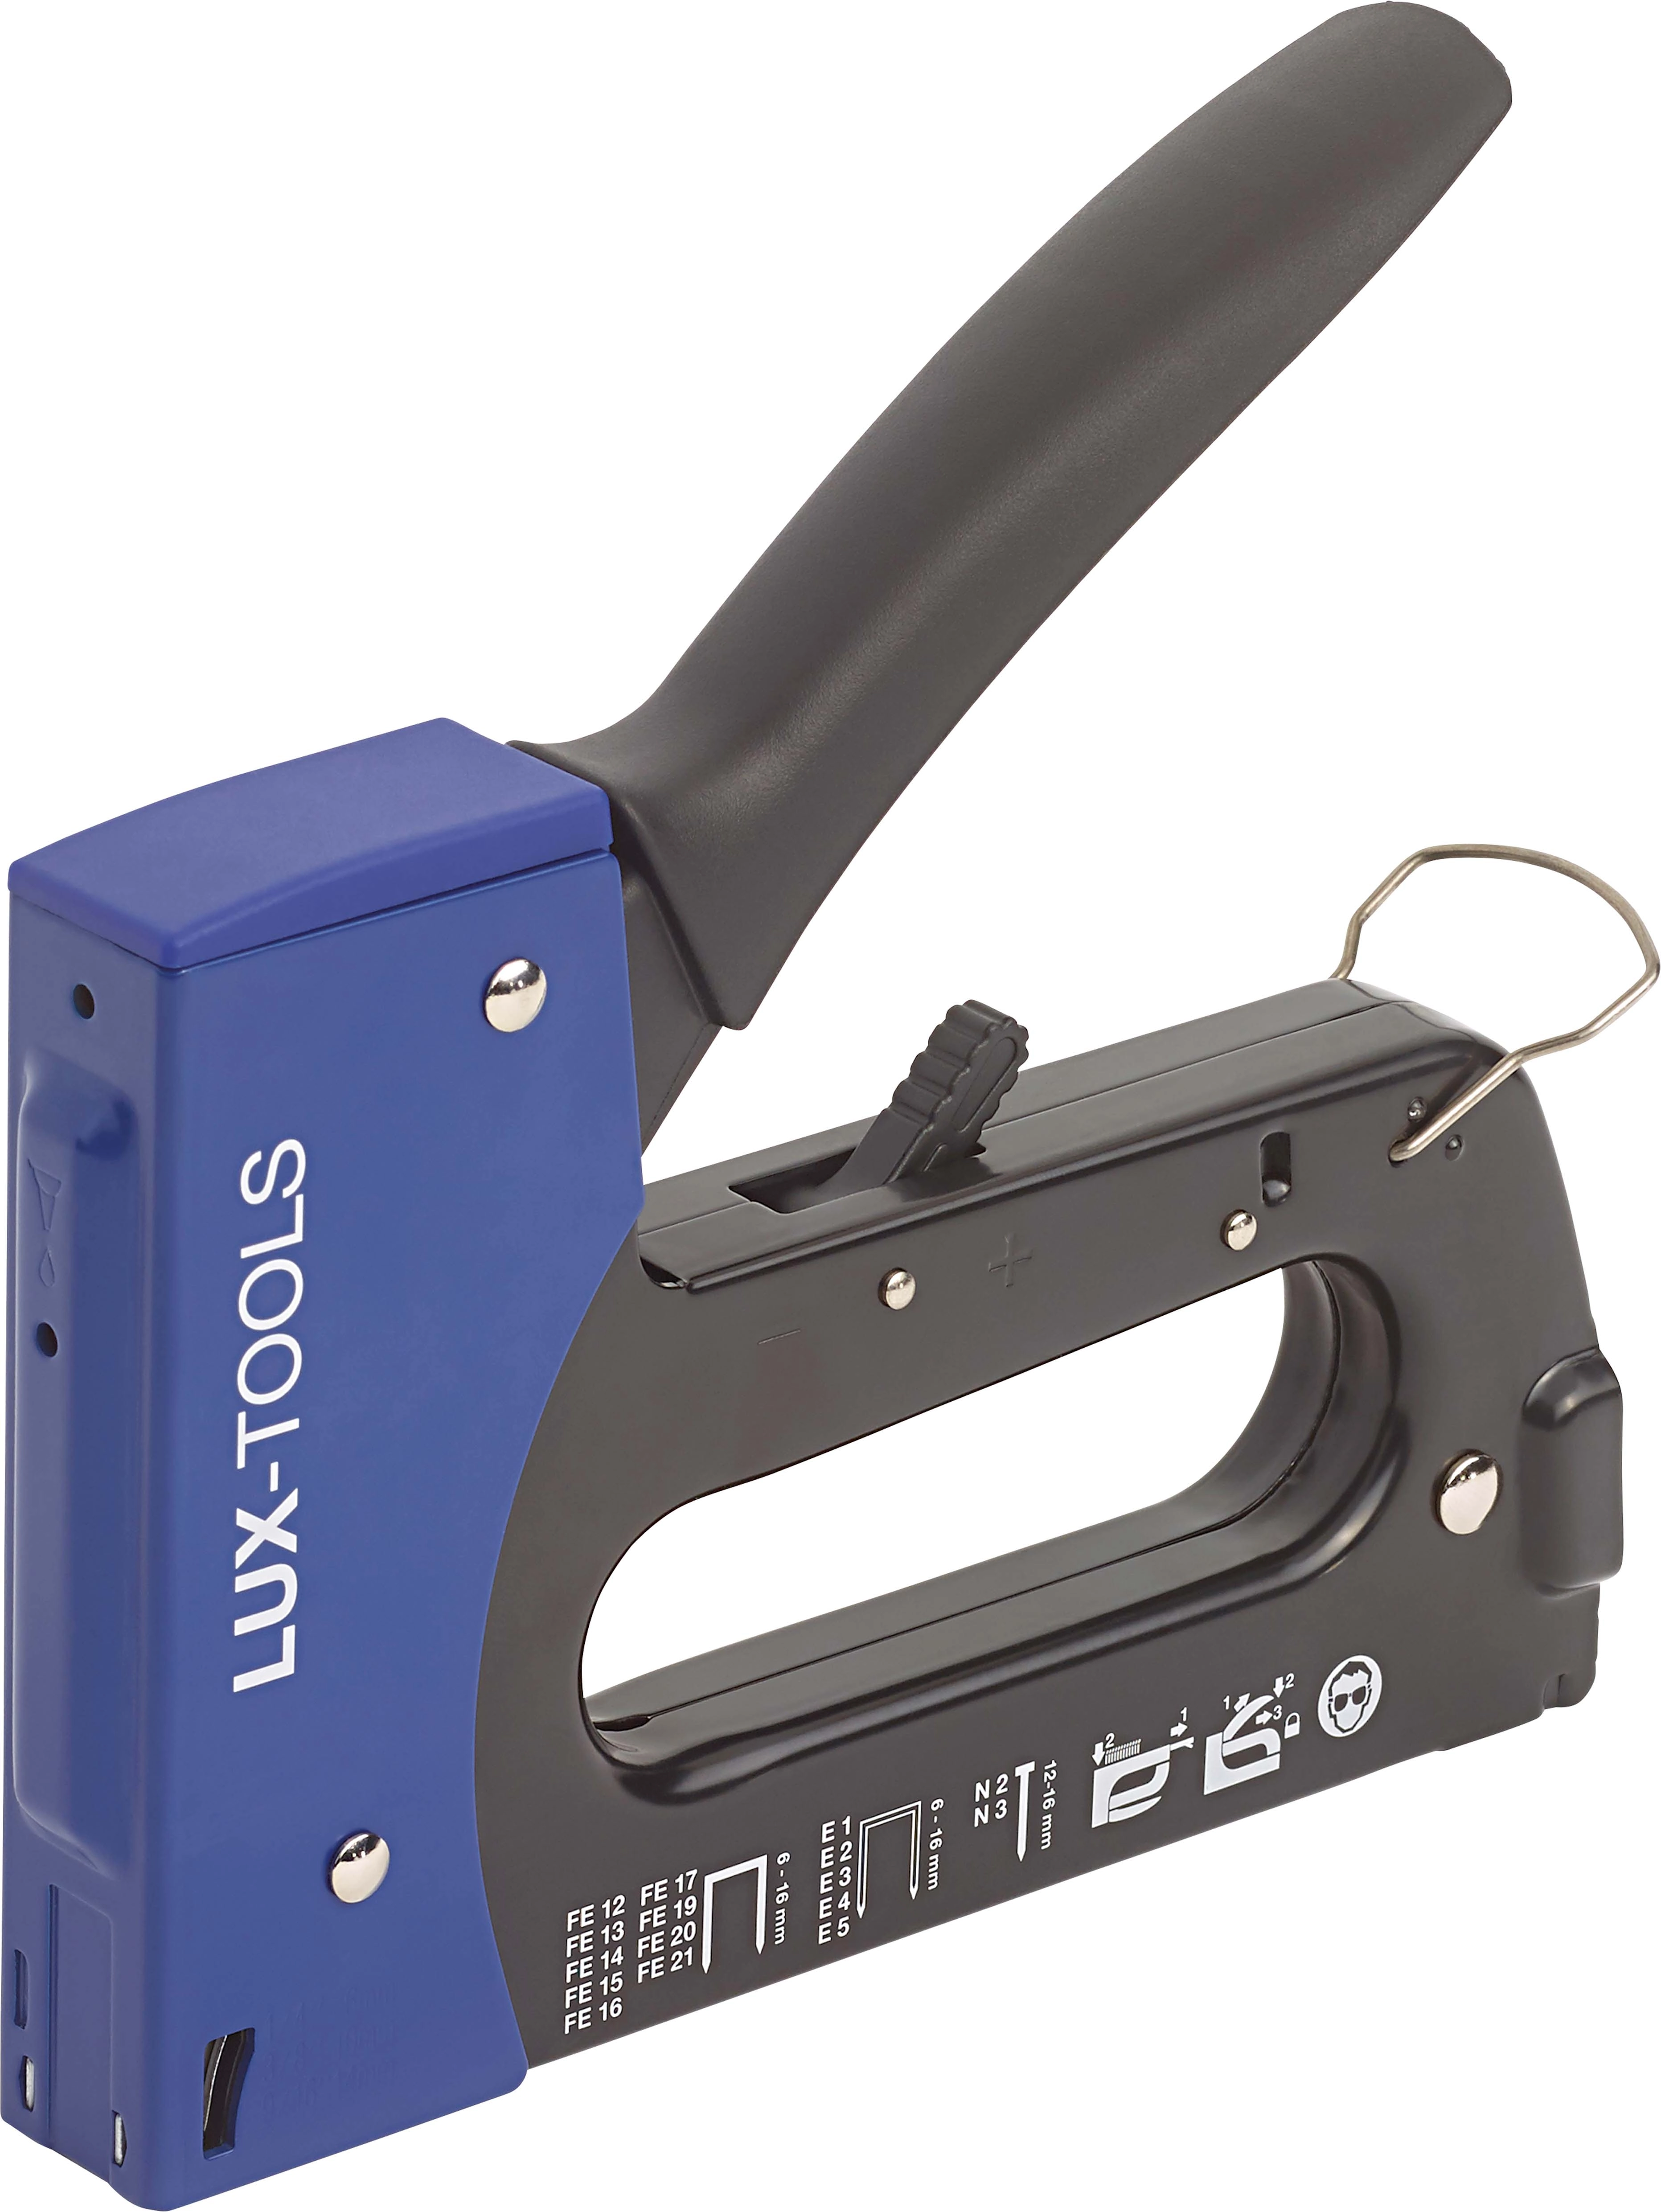 LUX Druckluft Kombi-Nagler-Set 10 mm-50 mm kaufen bei OBI